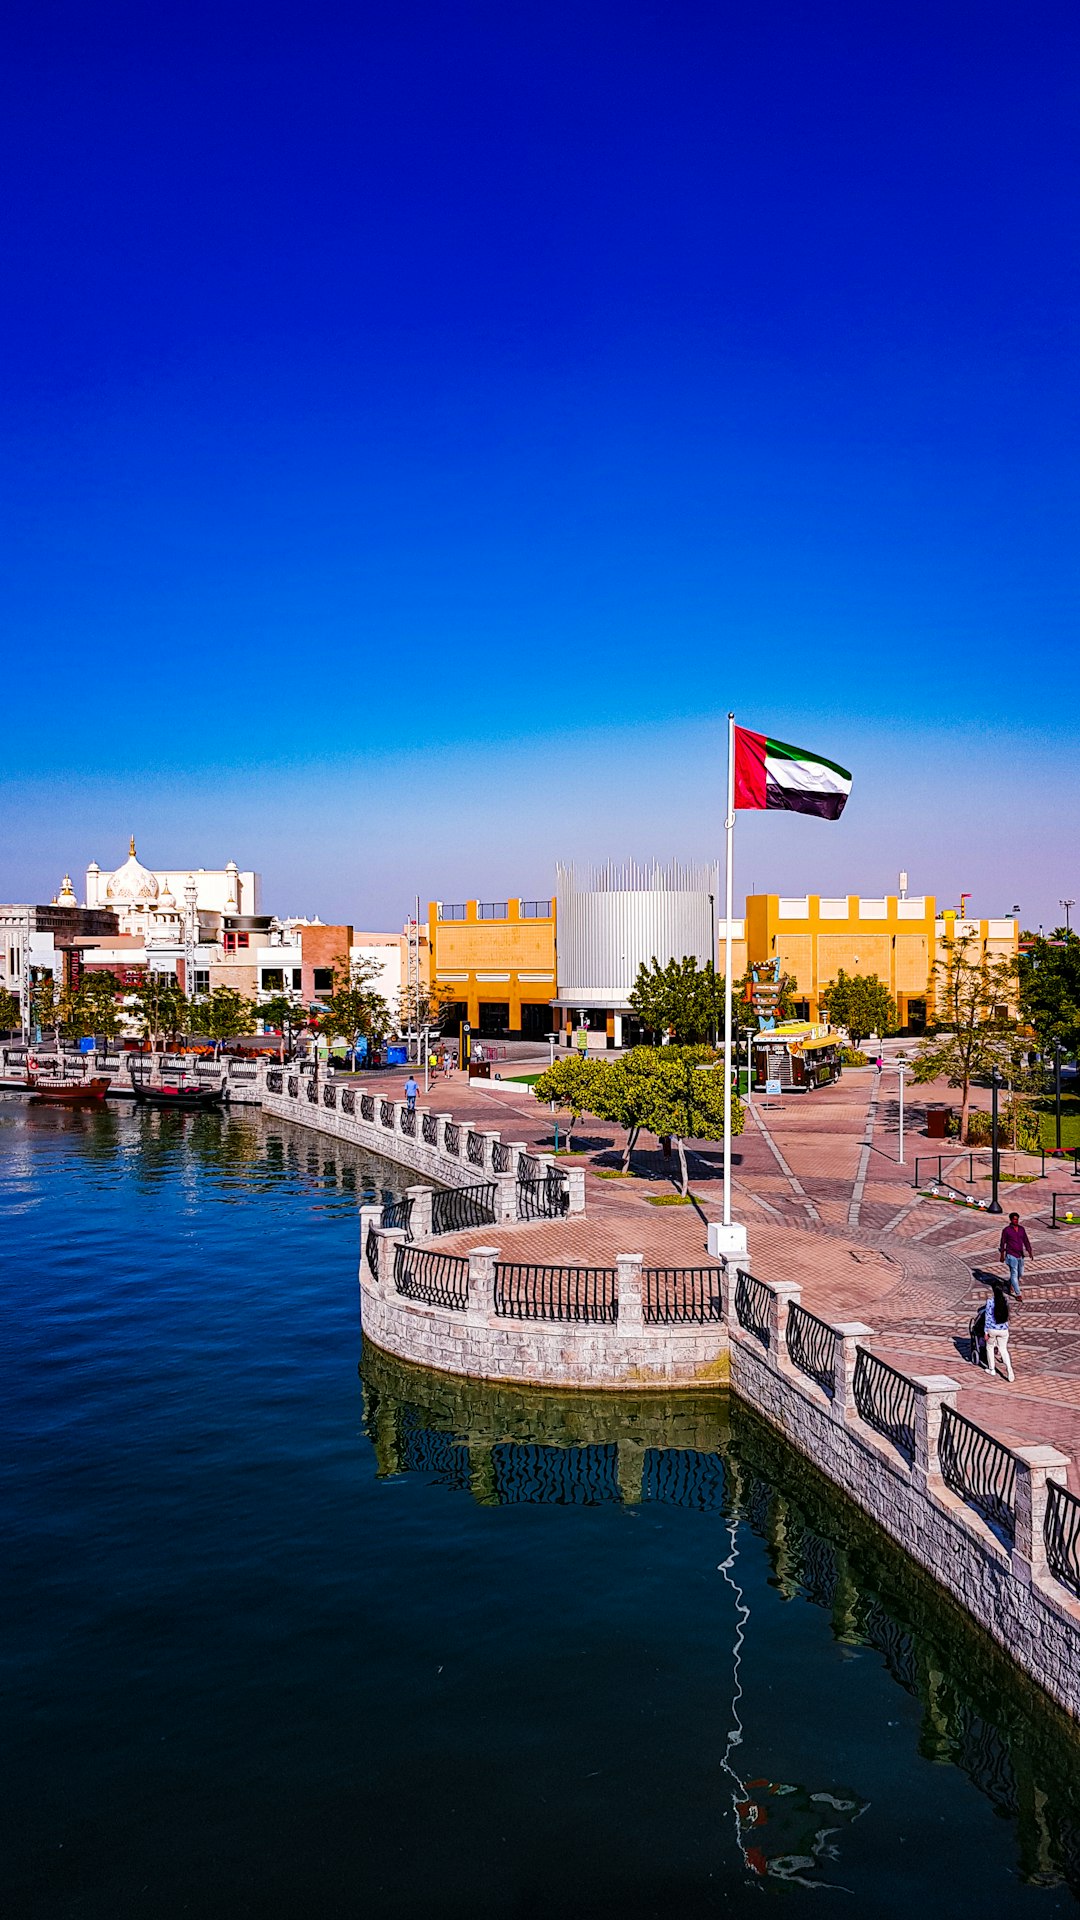 Town photo spot Riverland Dubai - Sheikh Zayed Road - Dubai - United Arab Emirates Abu Dhabi